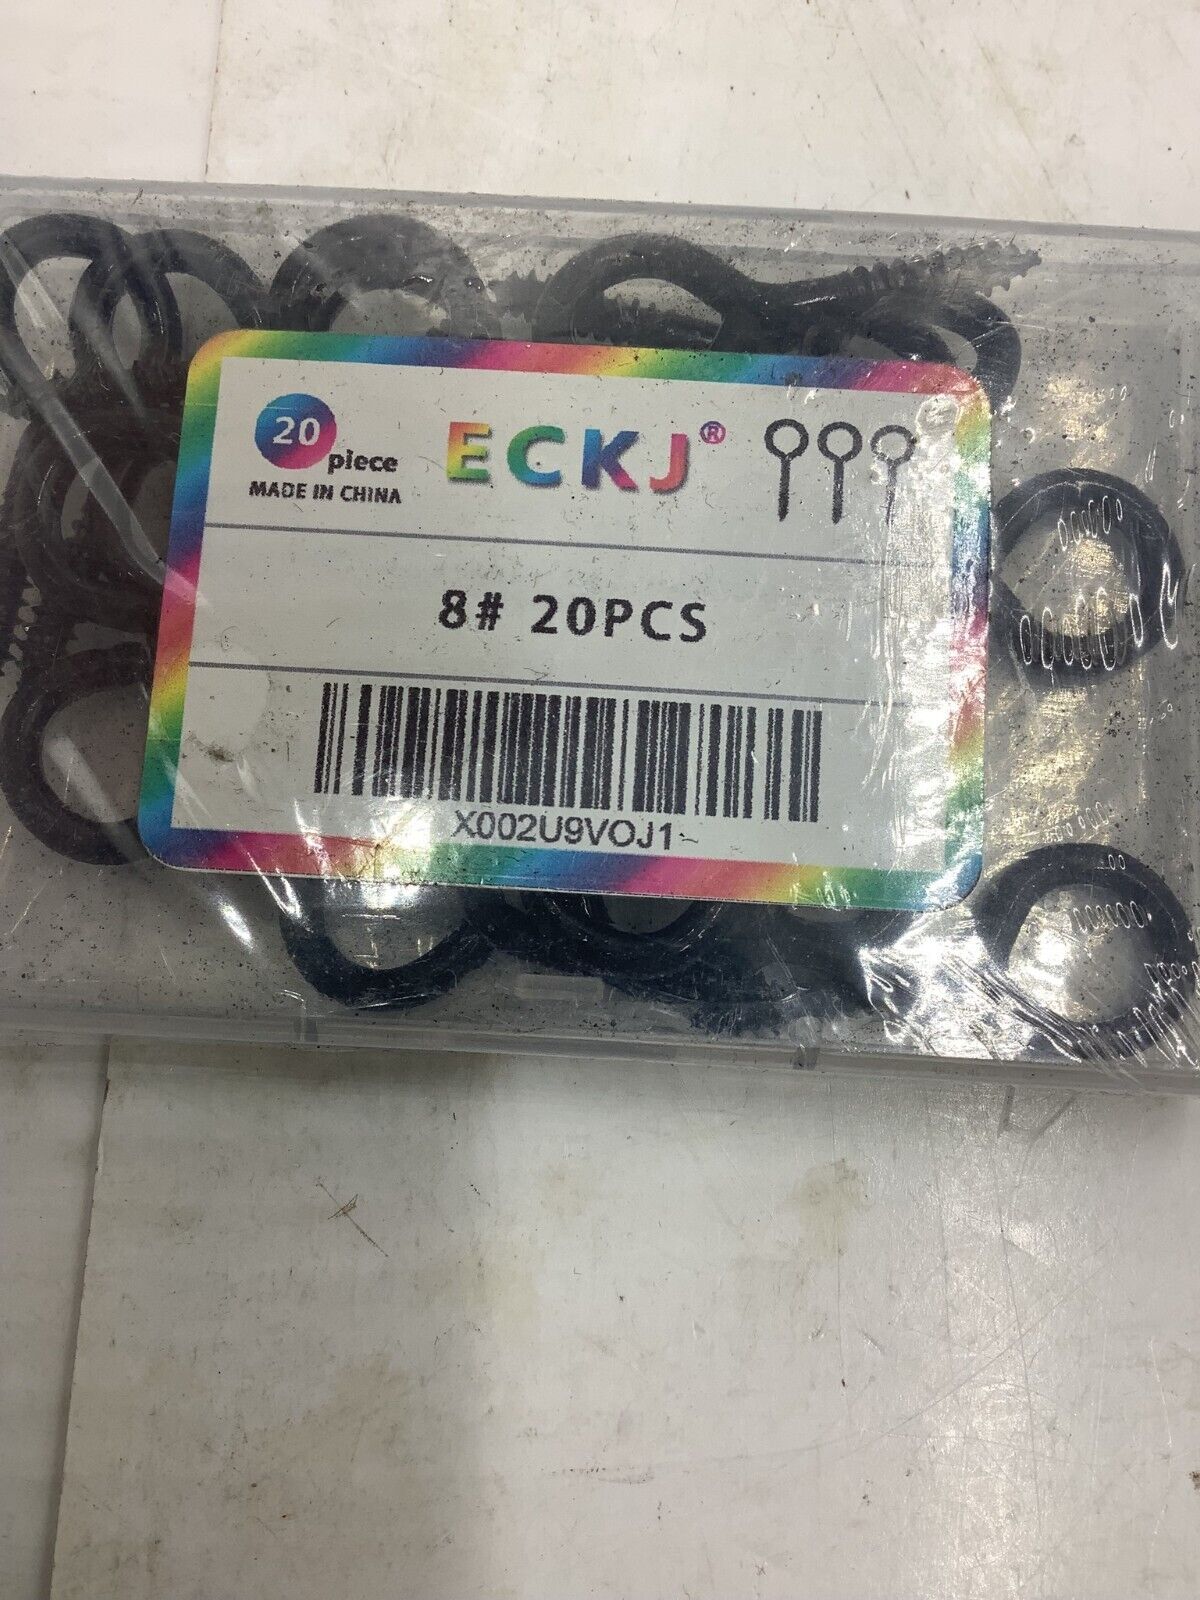 NEW (QTY 6 packs of 20) ECKJ #8 Black Screw Eye Hooks *Free Shipping*